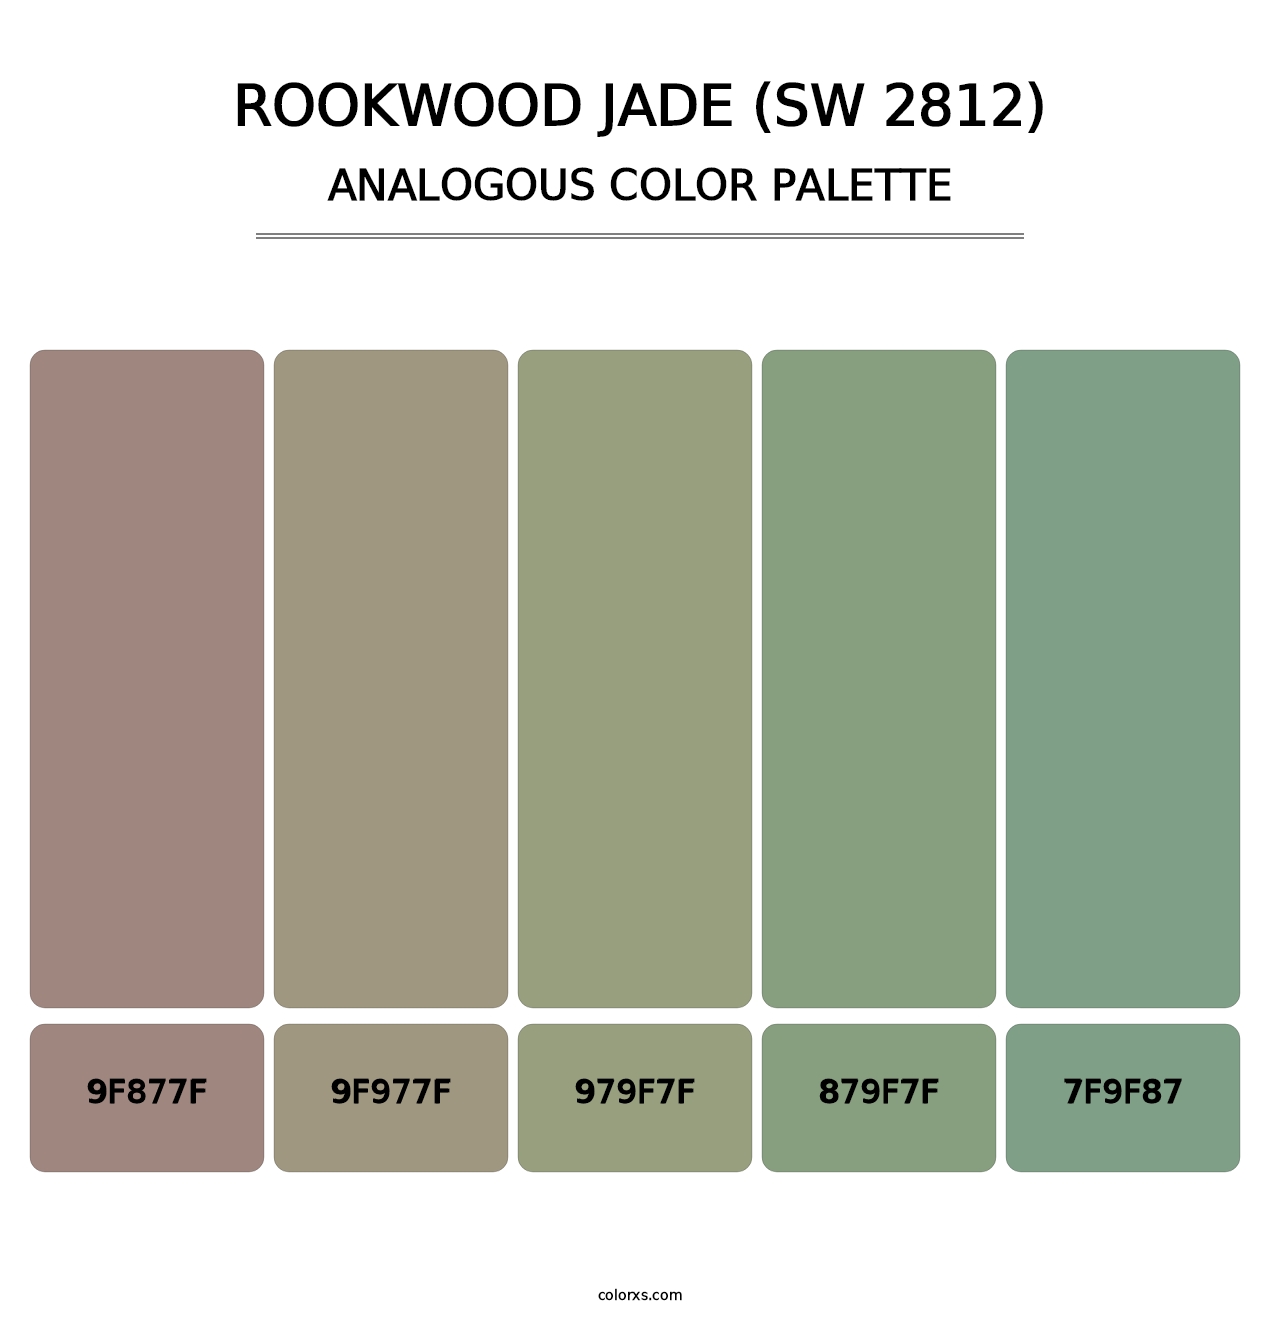 Rookwood Jade (SW 2812) - Analogous Color Palette